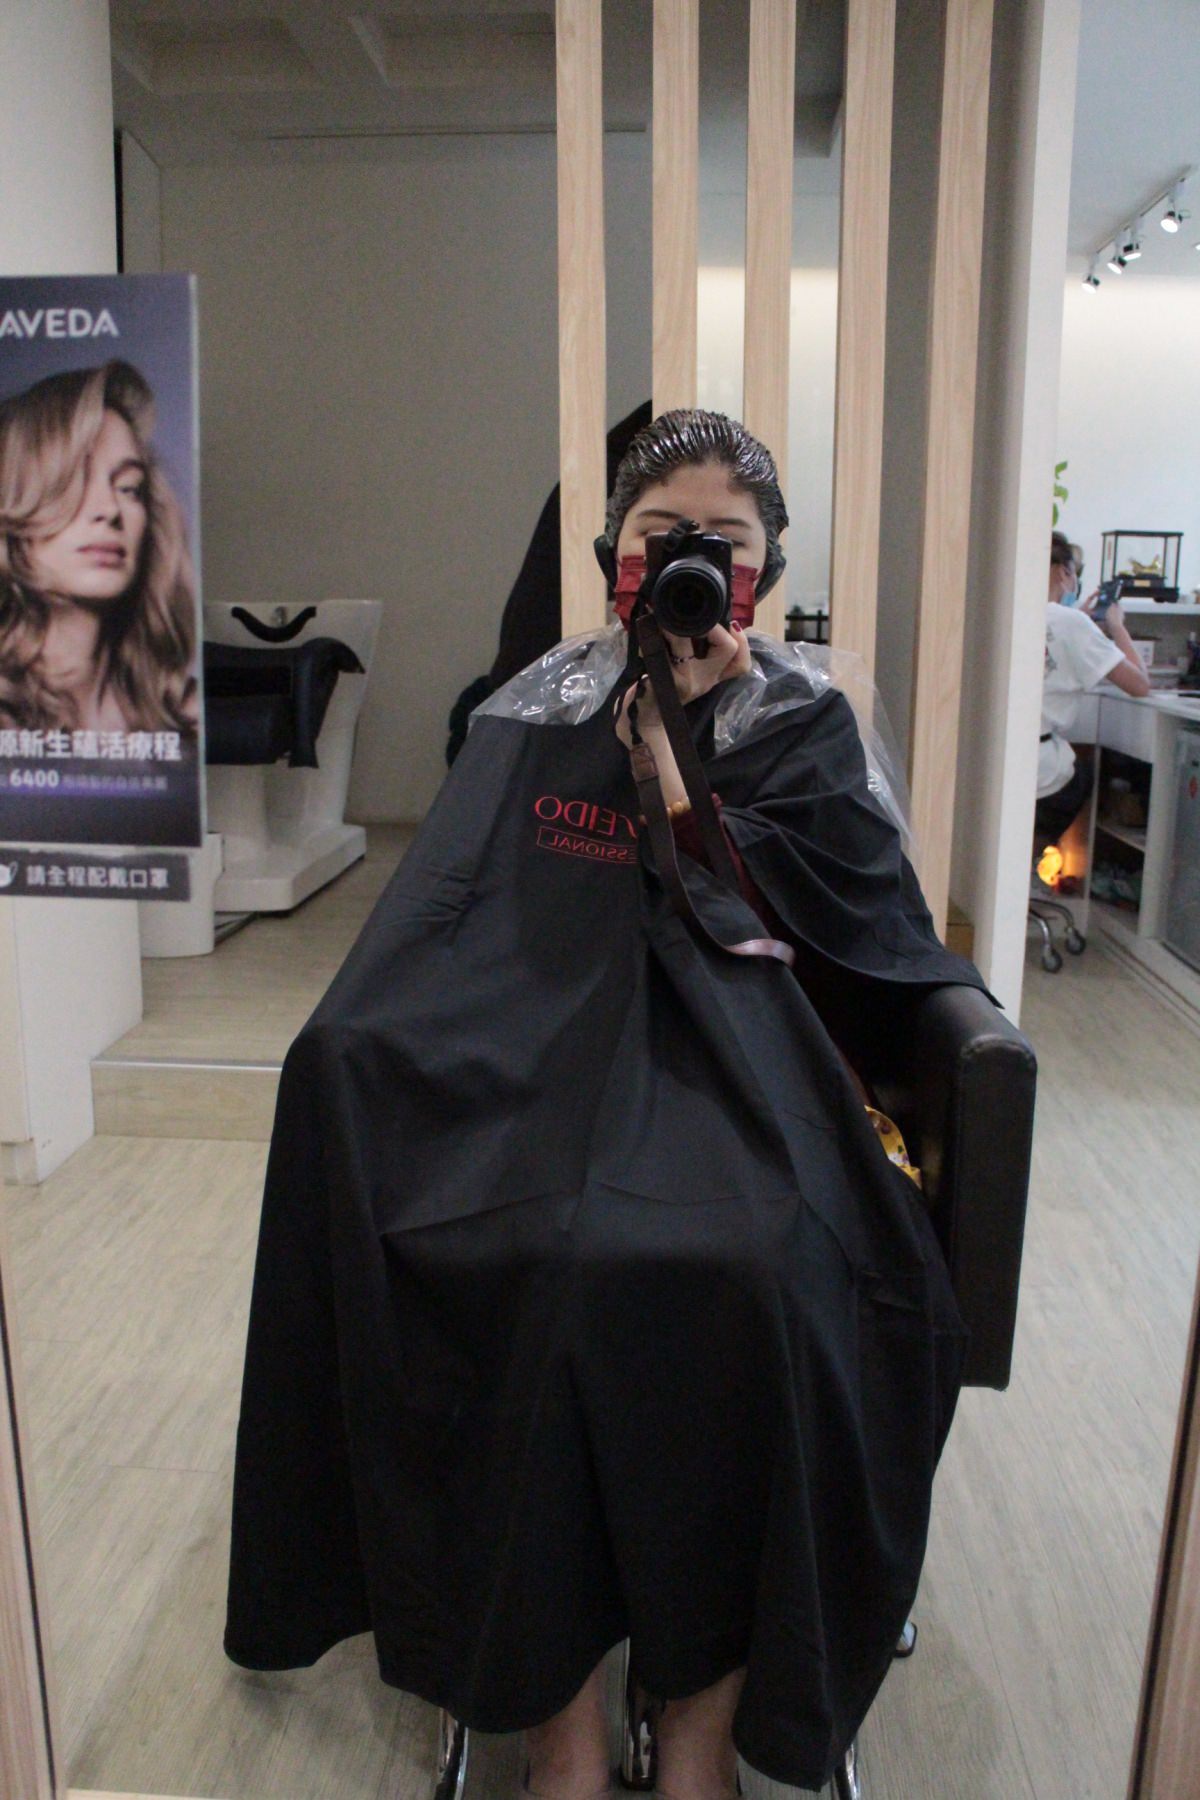 Amours hair salon